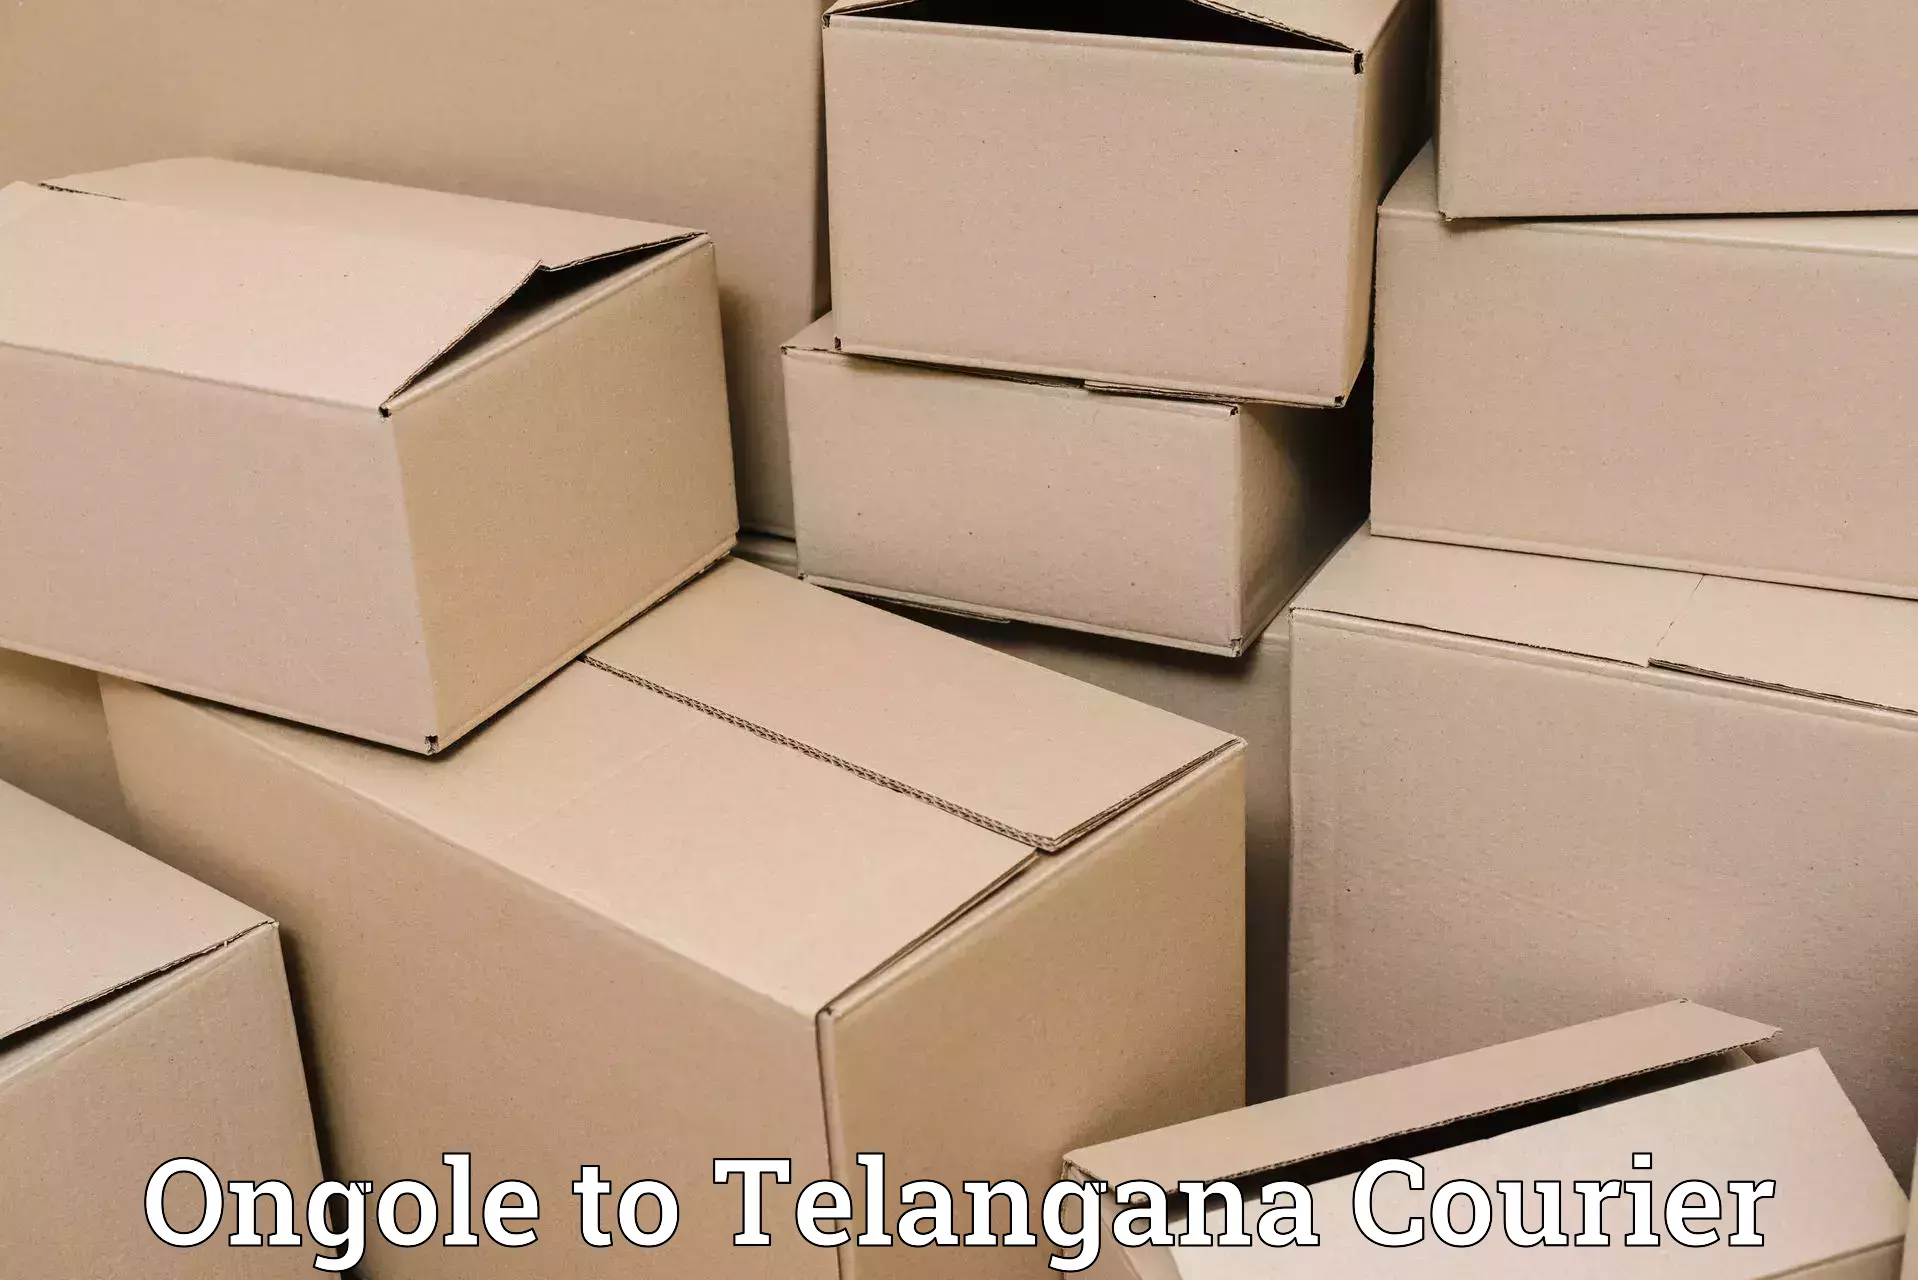 Digital courier platforms Ongole to Bhuvanagiri